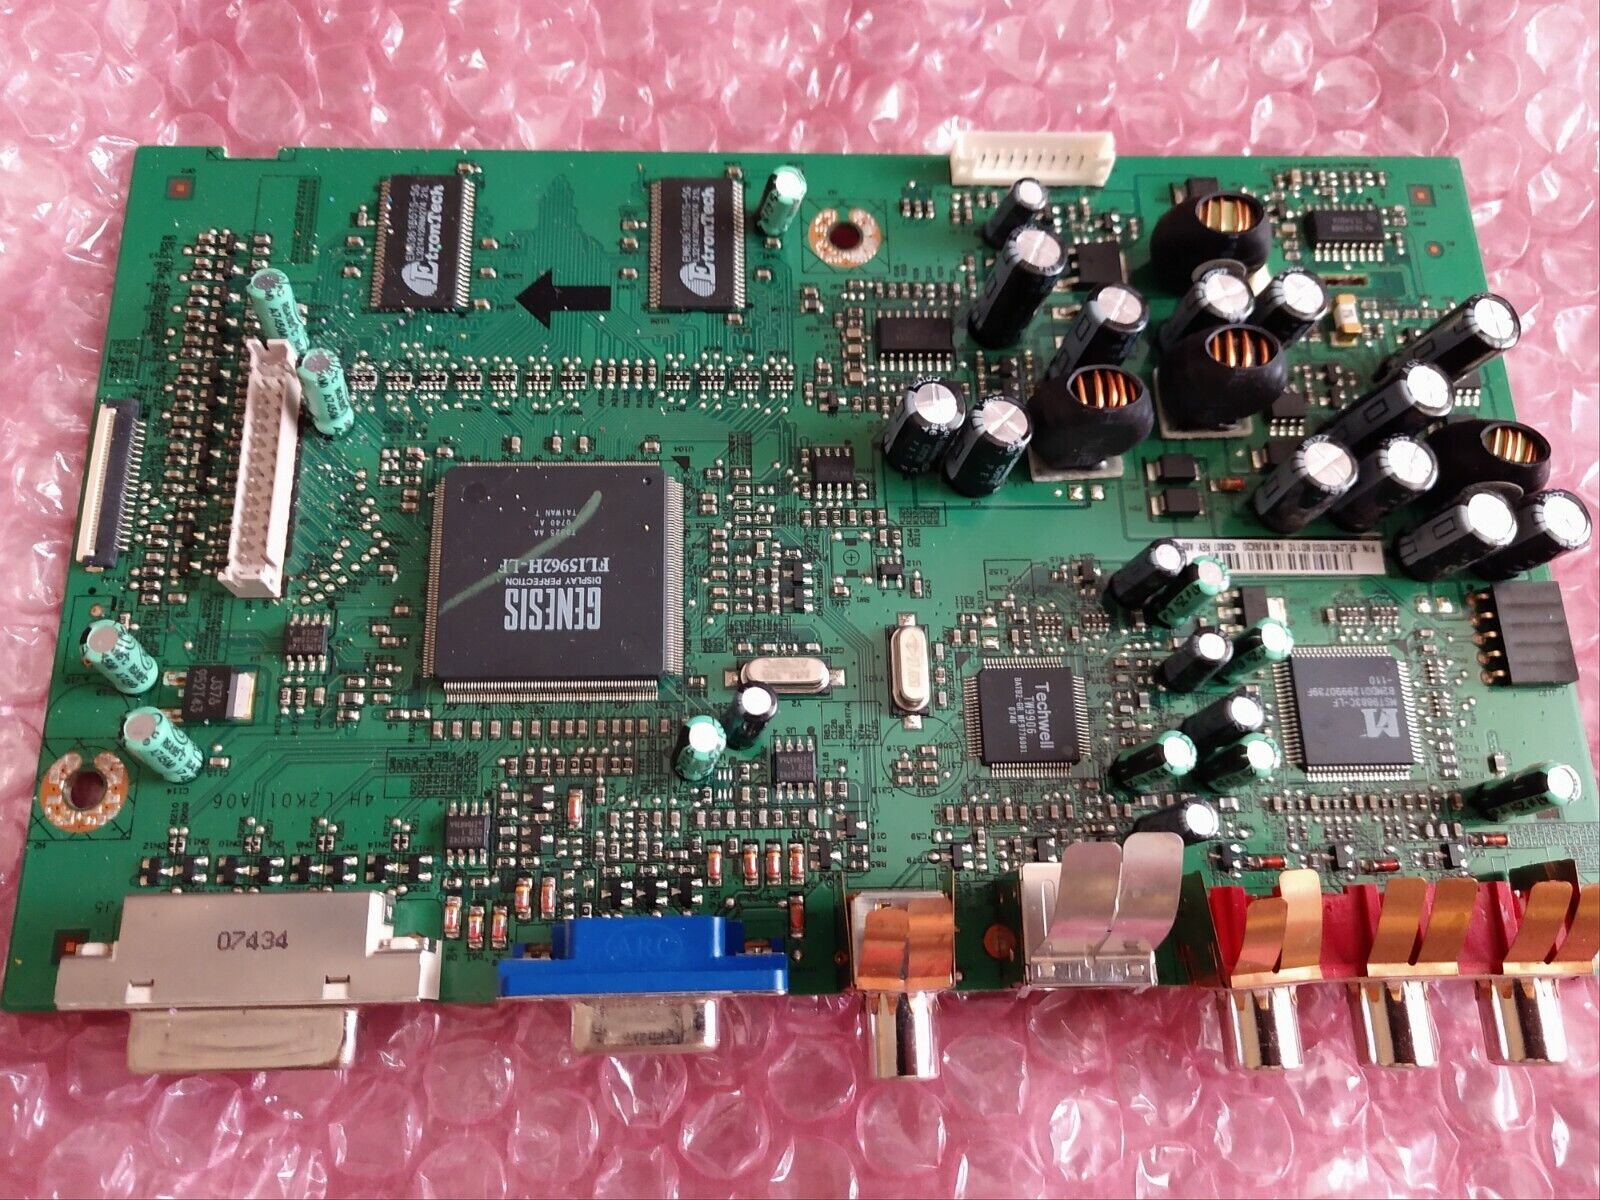 Dell 2407WFPB driver Interface main board motherboard Unit 4H.L2K01.A02